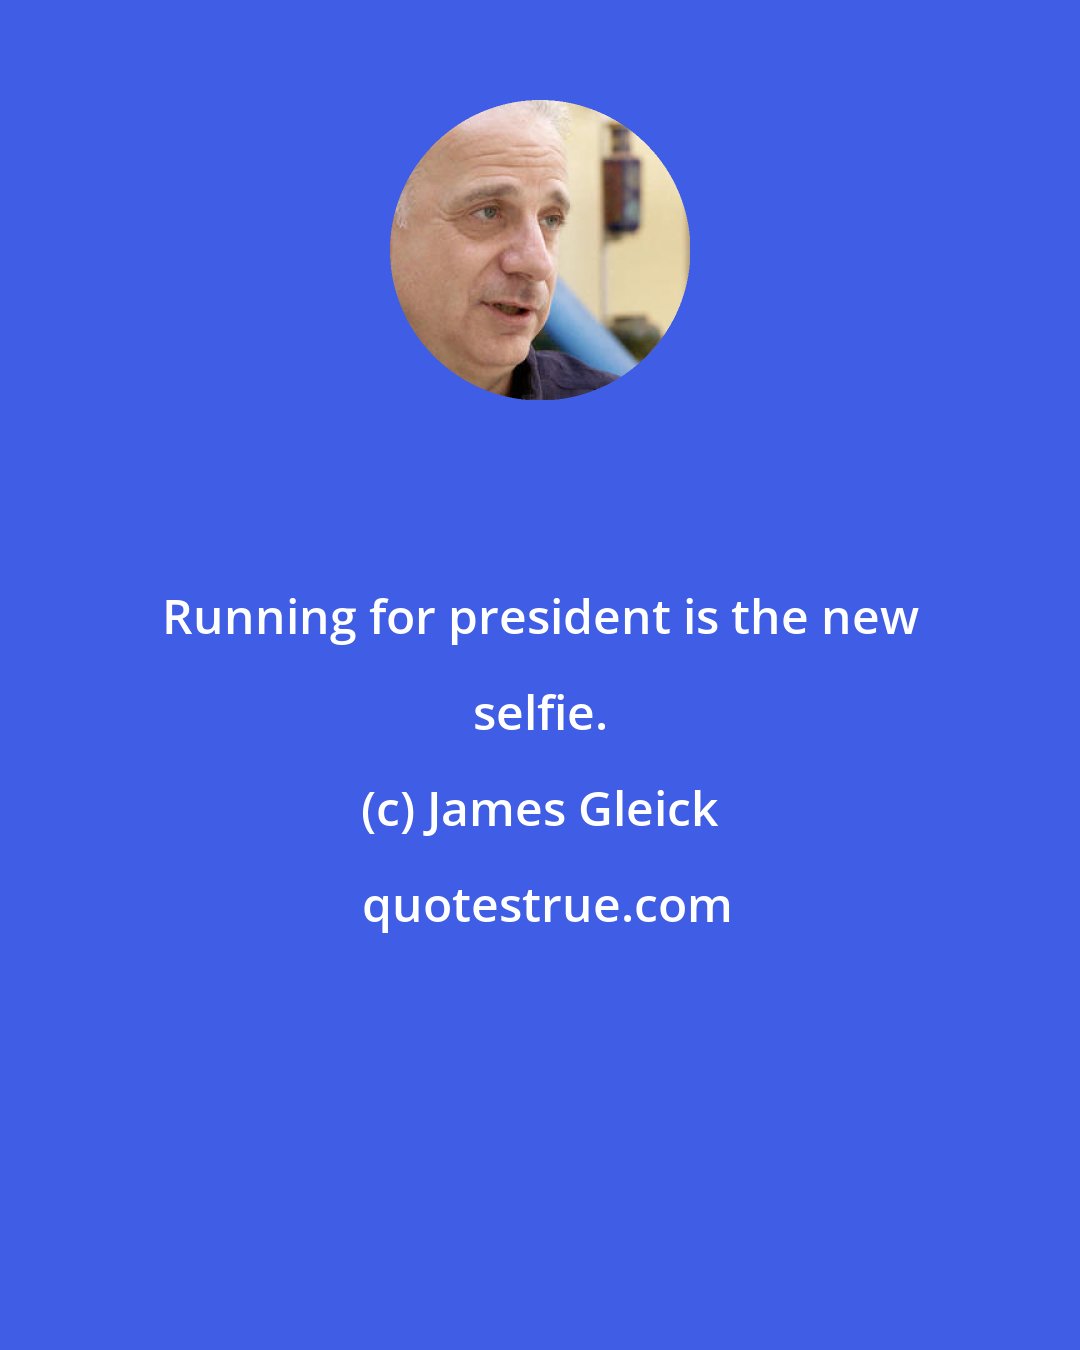 James Gleick: Running for president is the new selfie.